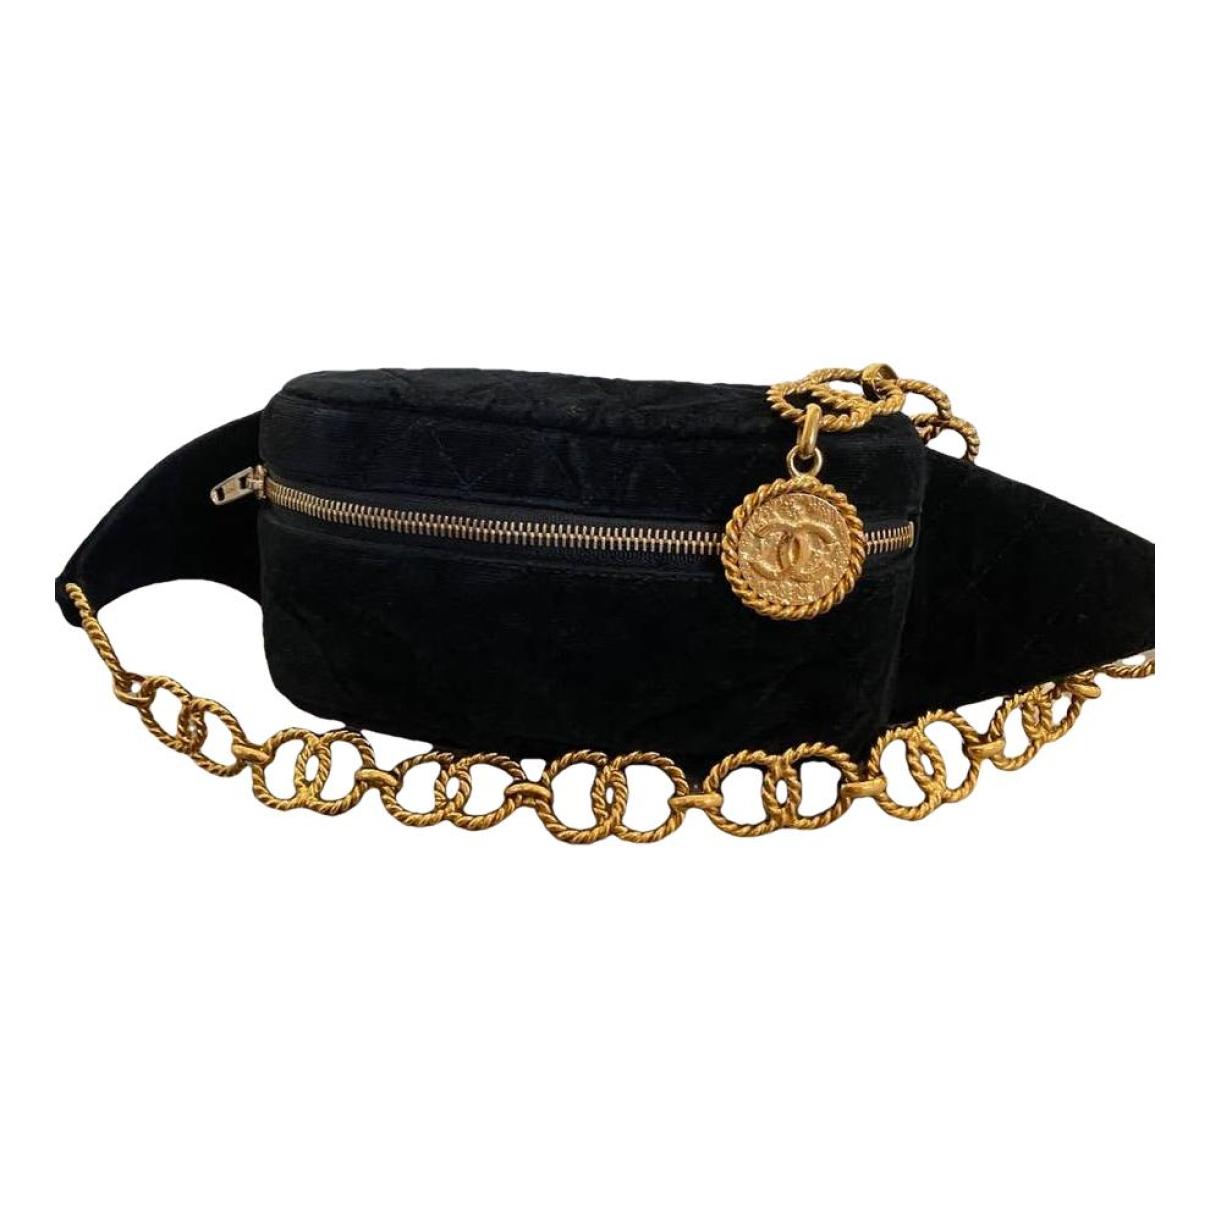 Chanel Black New Lin Belt Bag Fanny Pack Waist Pouch 923ca5